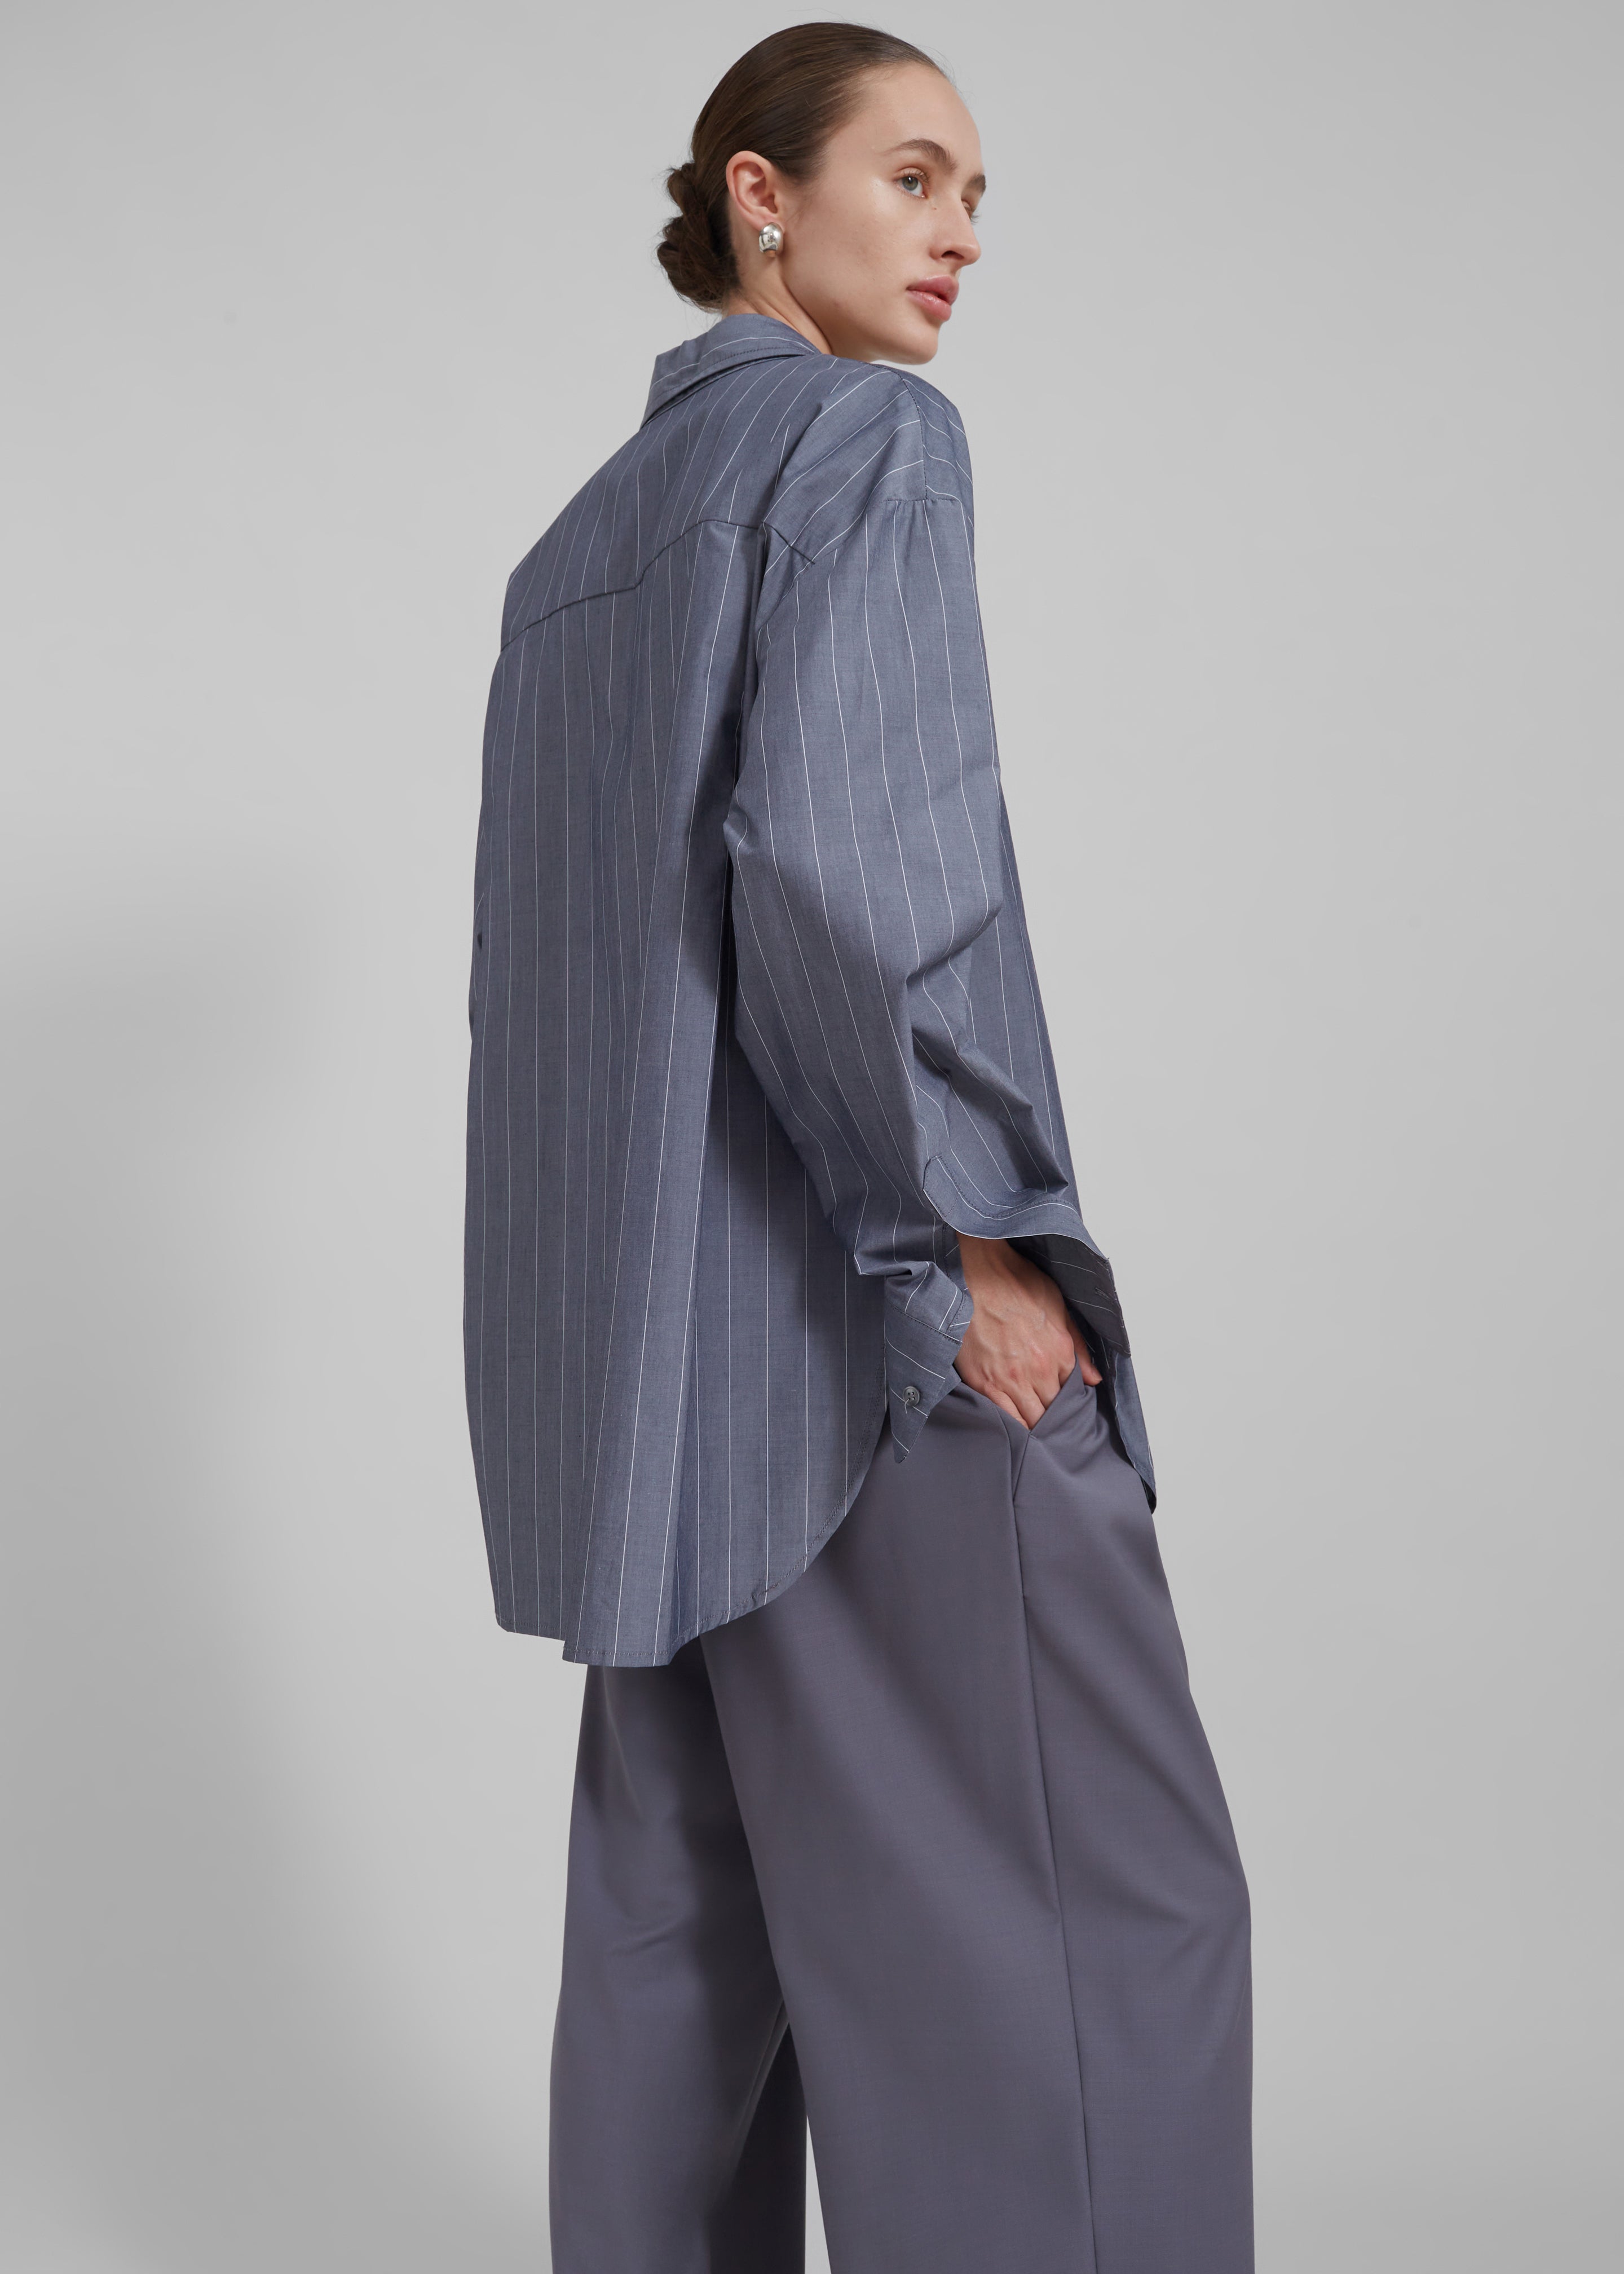 Beatrix Button Up Shirt - Grey/White Pinstripe - 9